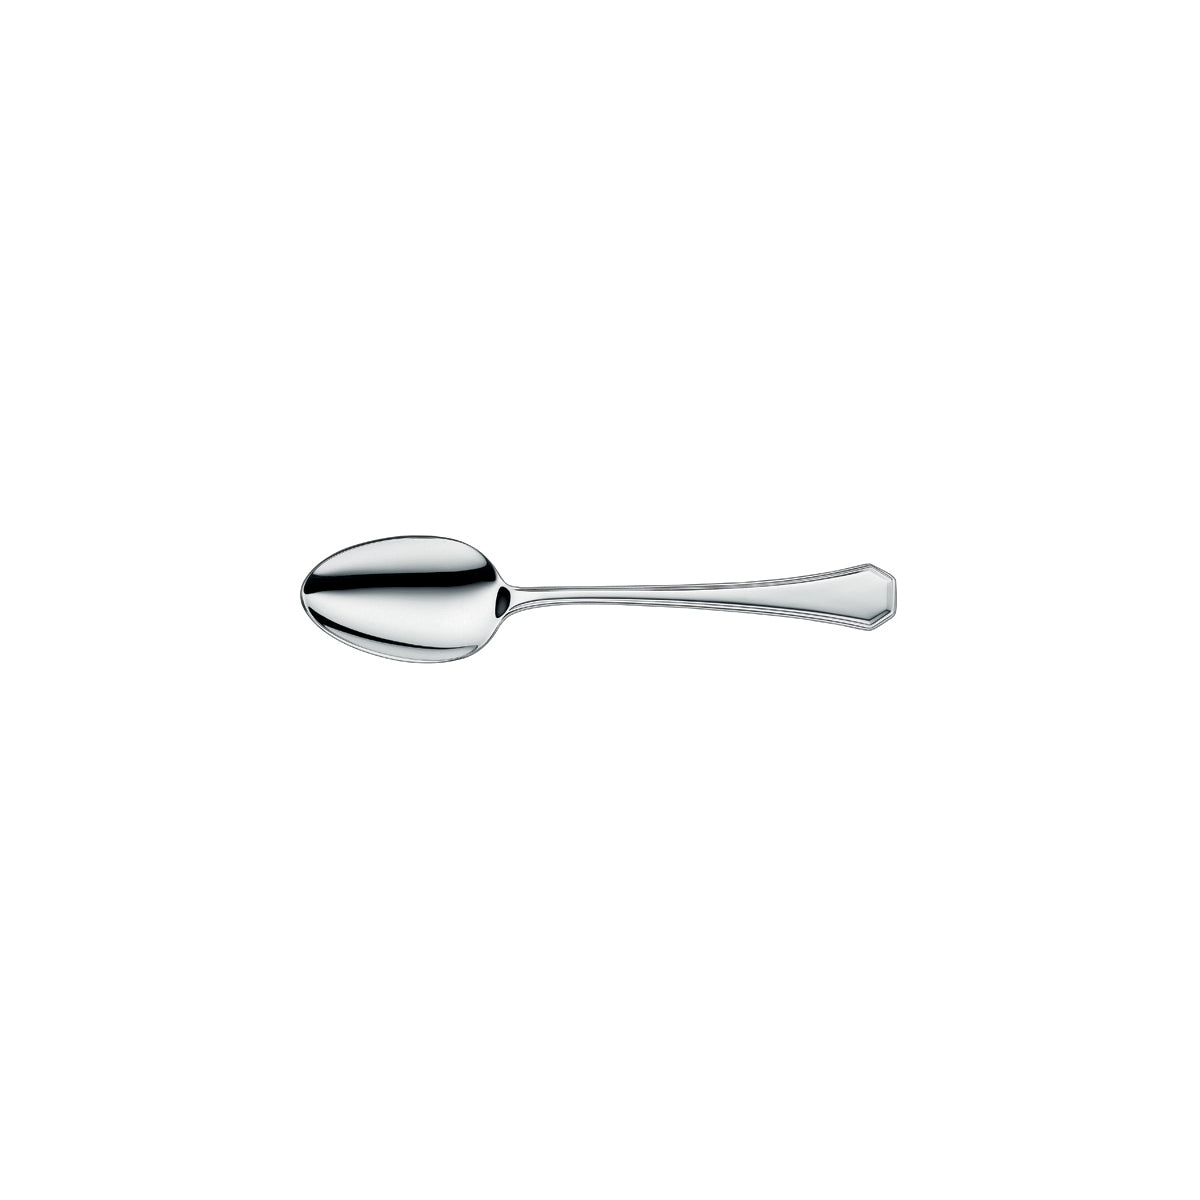 12.6204.6040 WMF Mondial Dessert Spoon Stainless Steel Tomkin Australia Hospitality Supplies